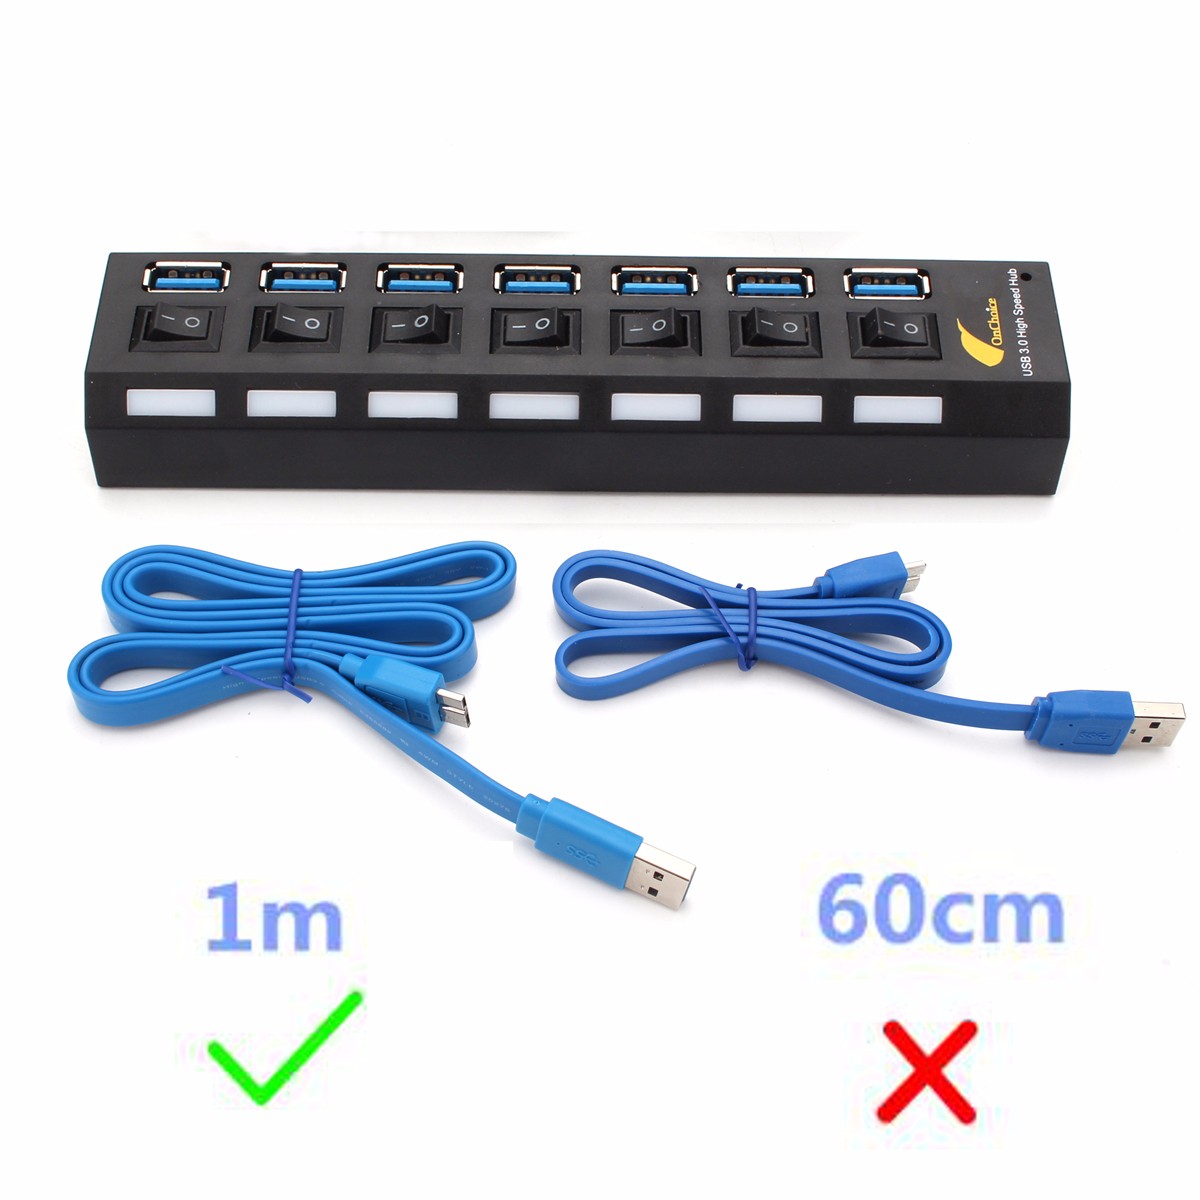 ONCHOICE 7Port USB 3.0 Hub On/Off Switch EU US UK AC Power Adapter For Laptop Desktop 4